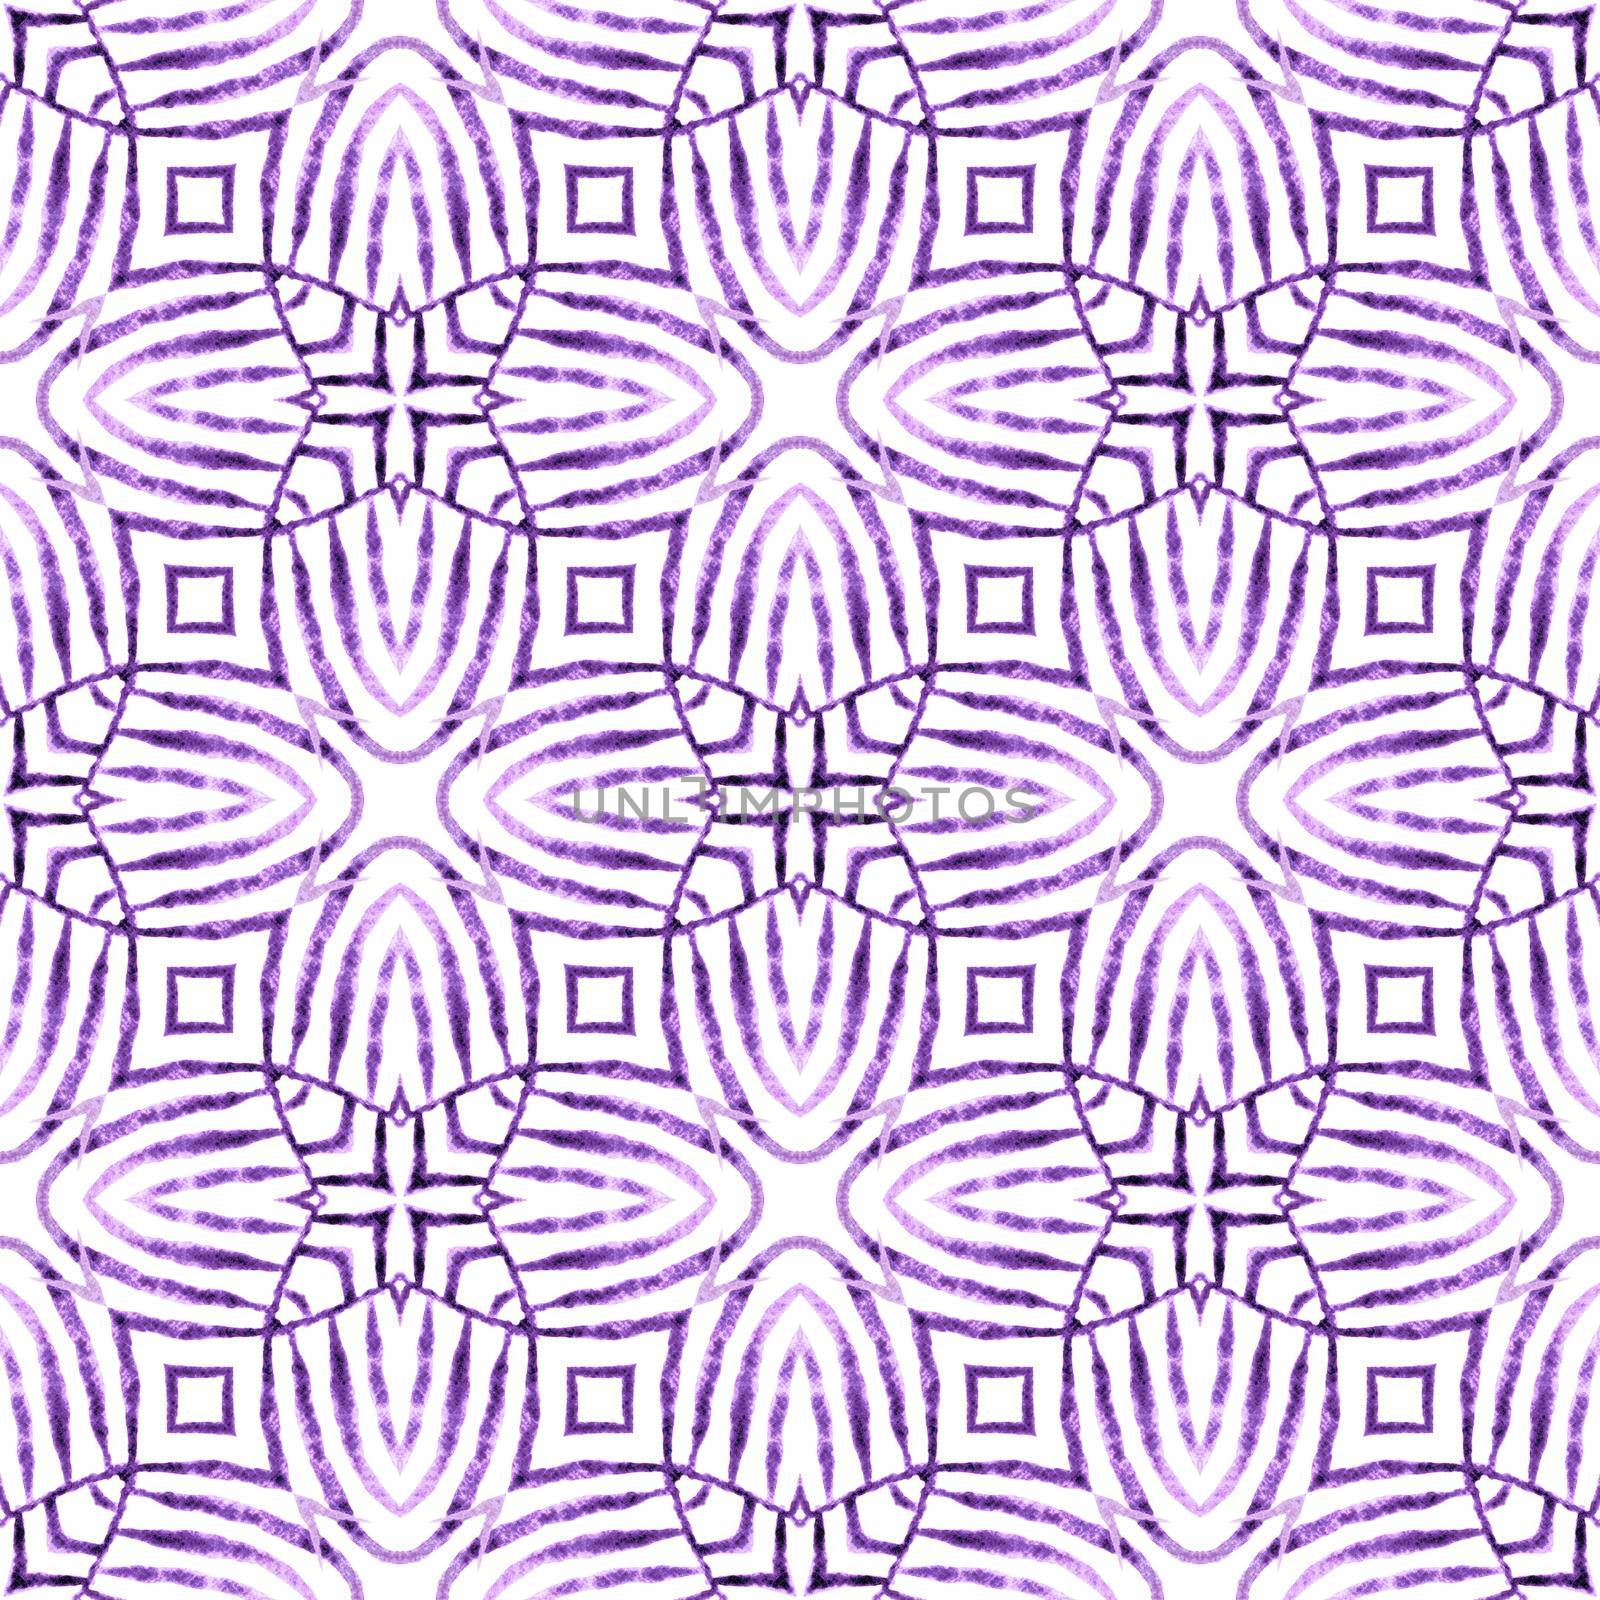 Repeating striped hand drawn border. Purple by beginagain